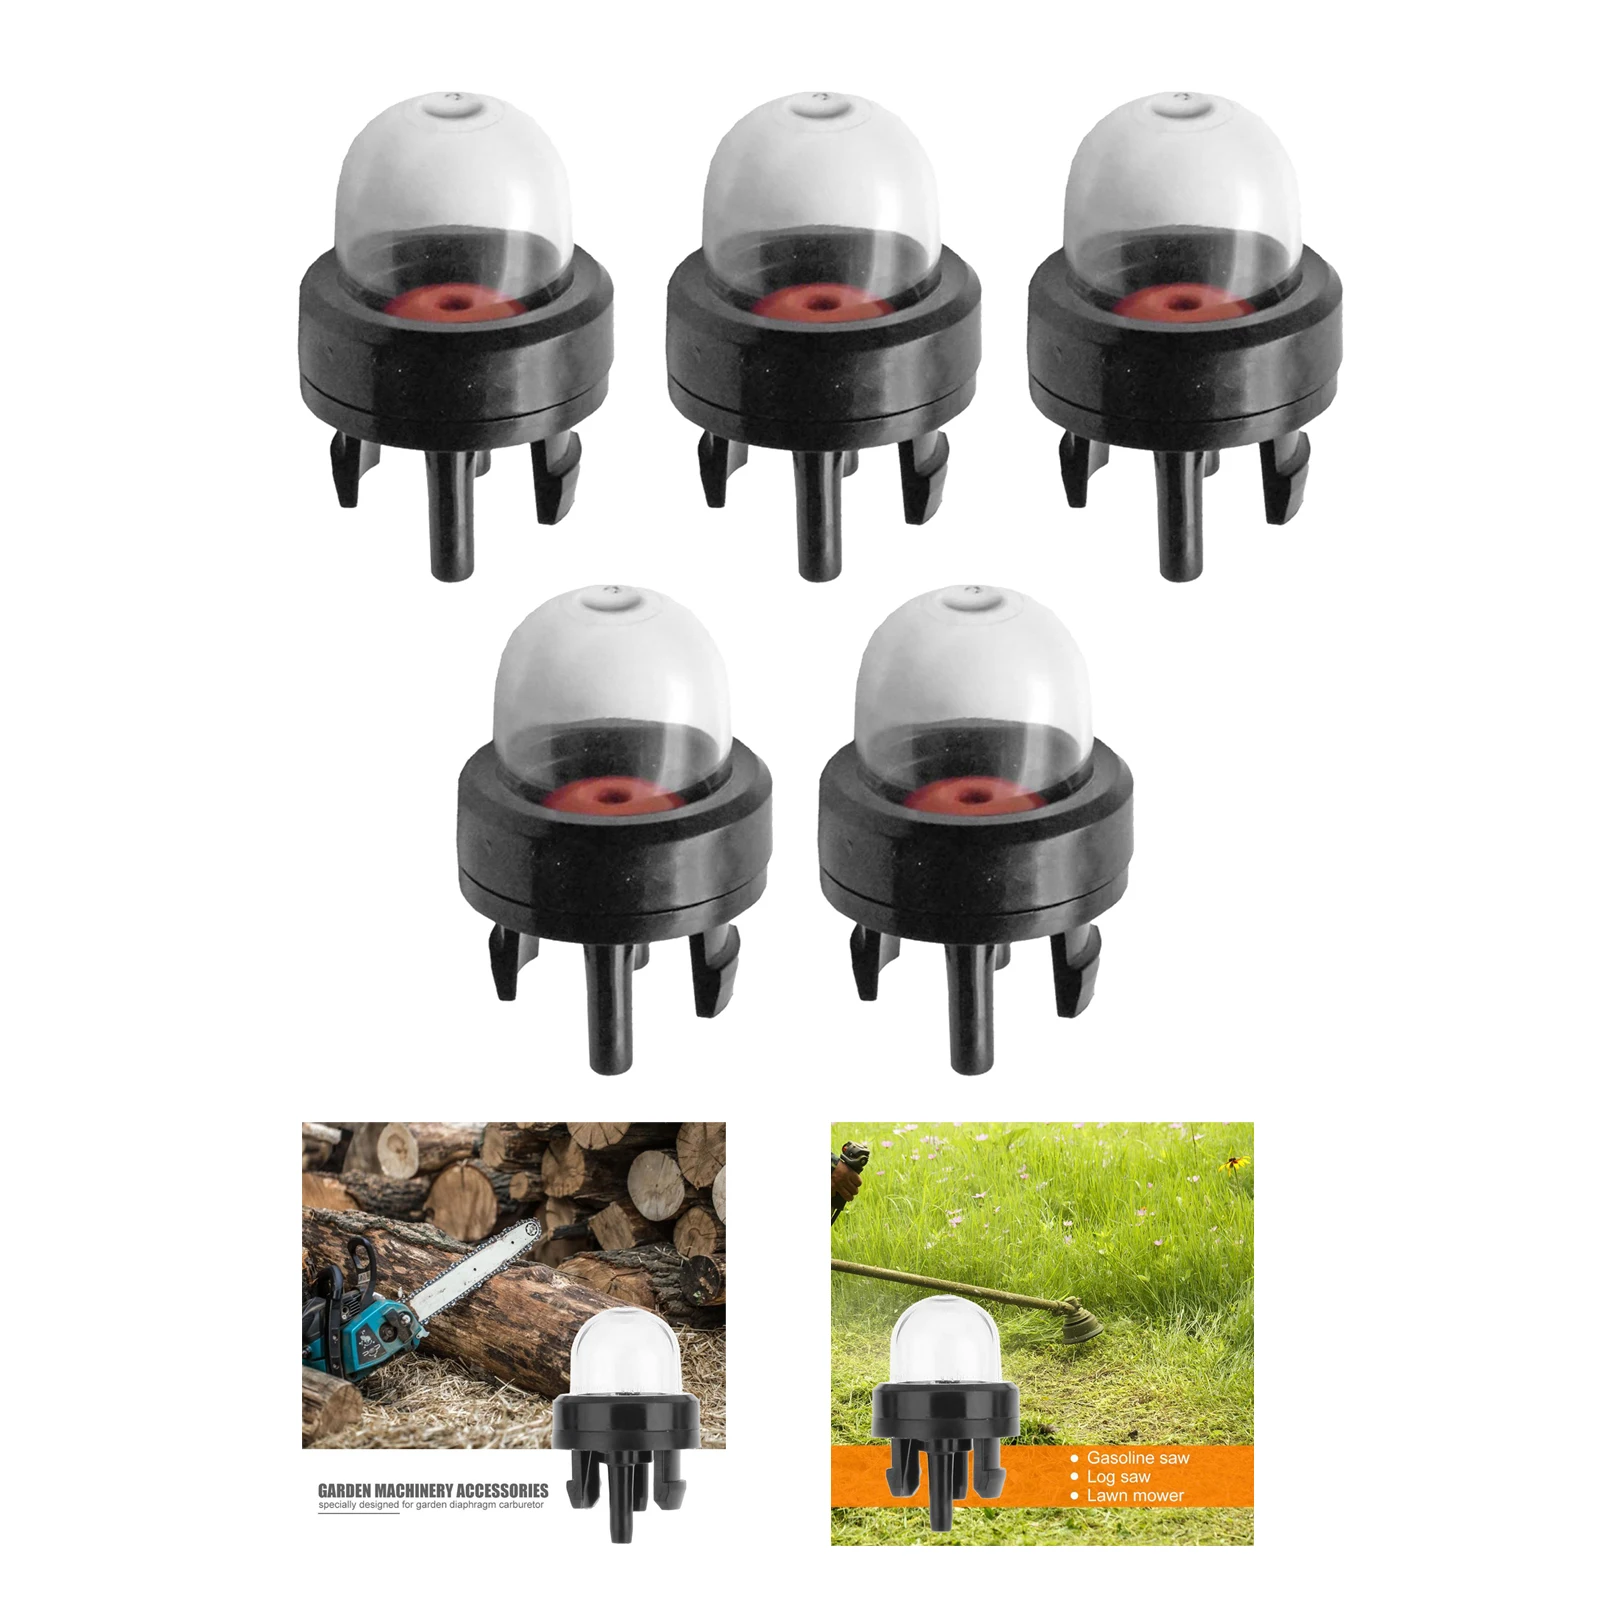 Set of 5 Uiversal Lawn Mower Carburetor Primer Bulbs Pump Kit for Picking